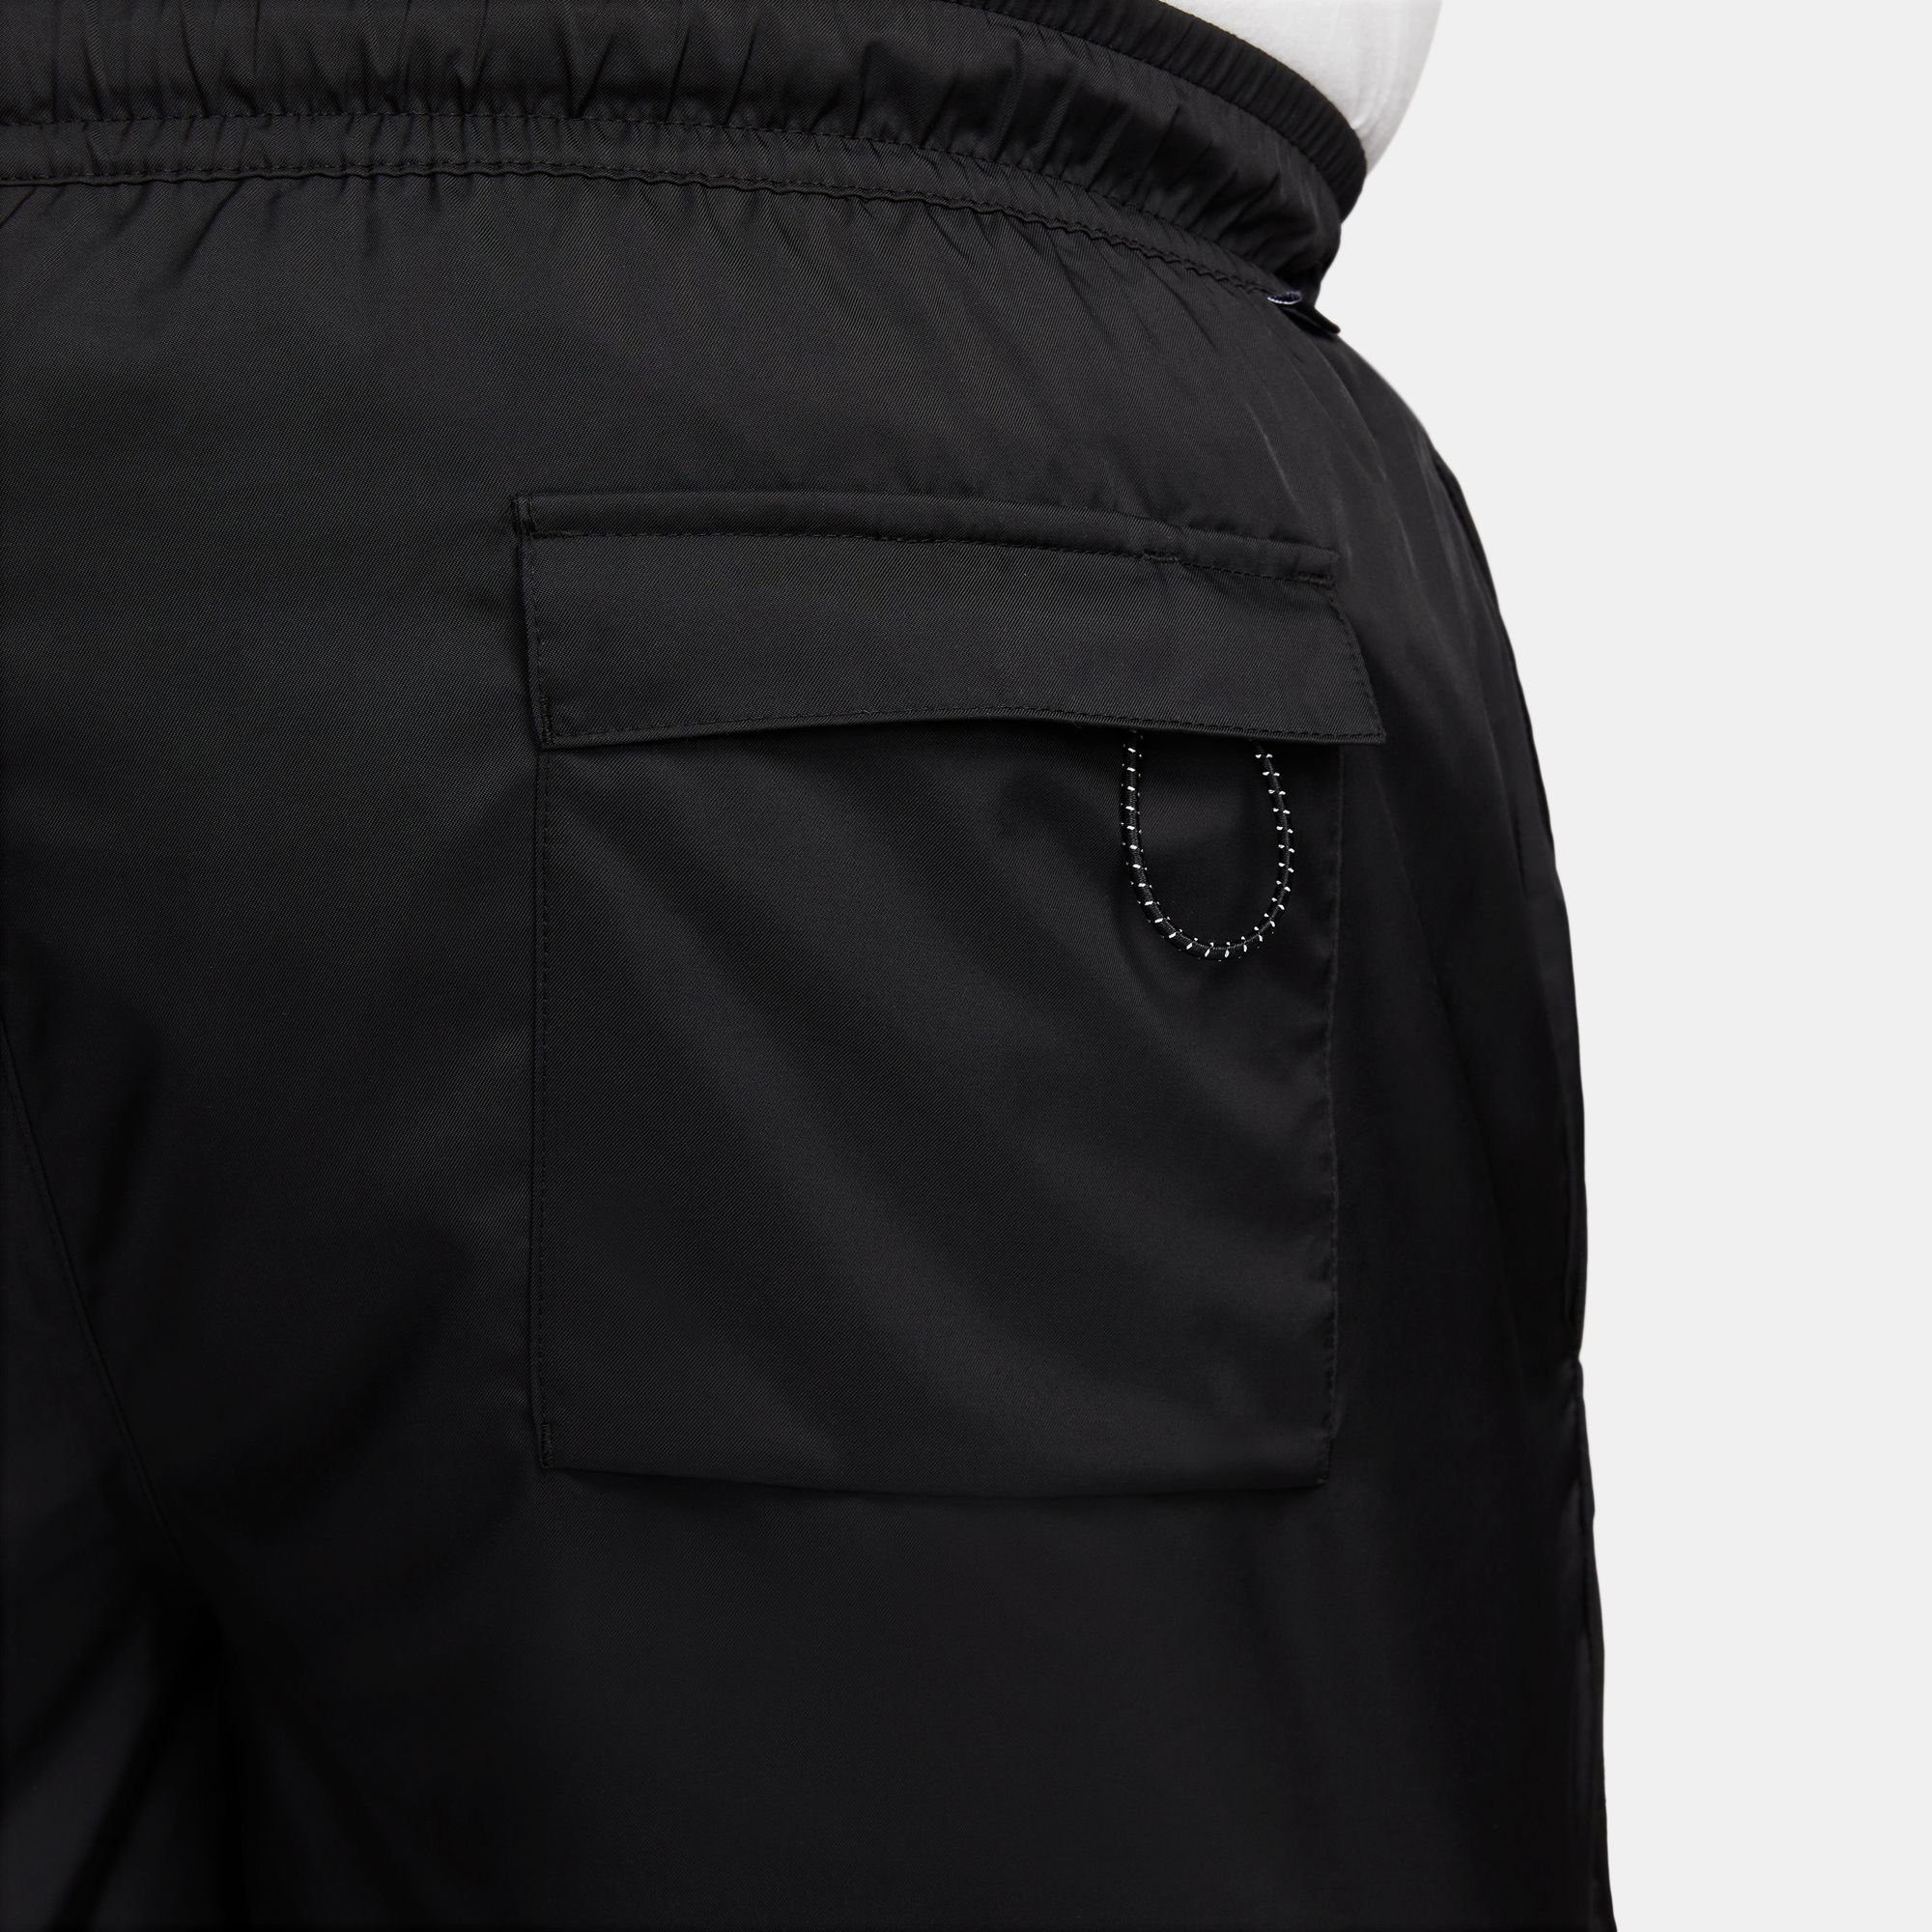 Sportswear Woven Shorts Men's Shorts Sport Flow Lined BLACK/WHITE Essentials Nike